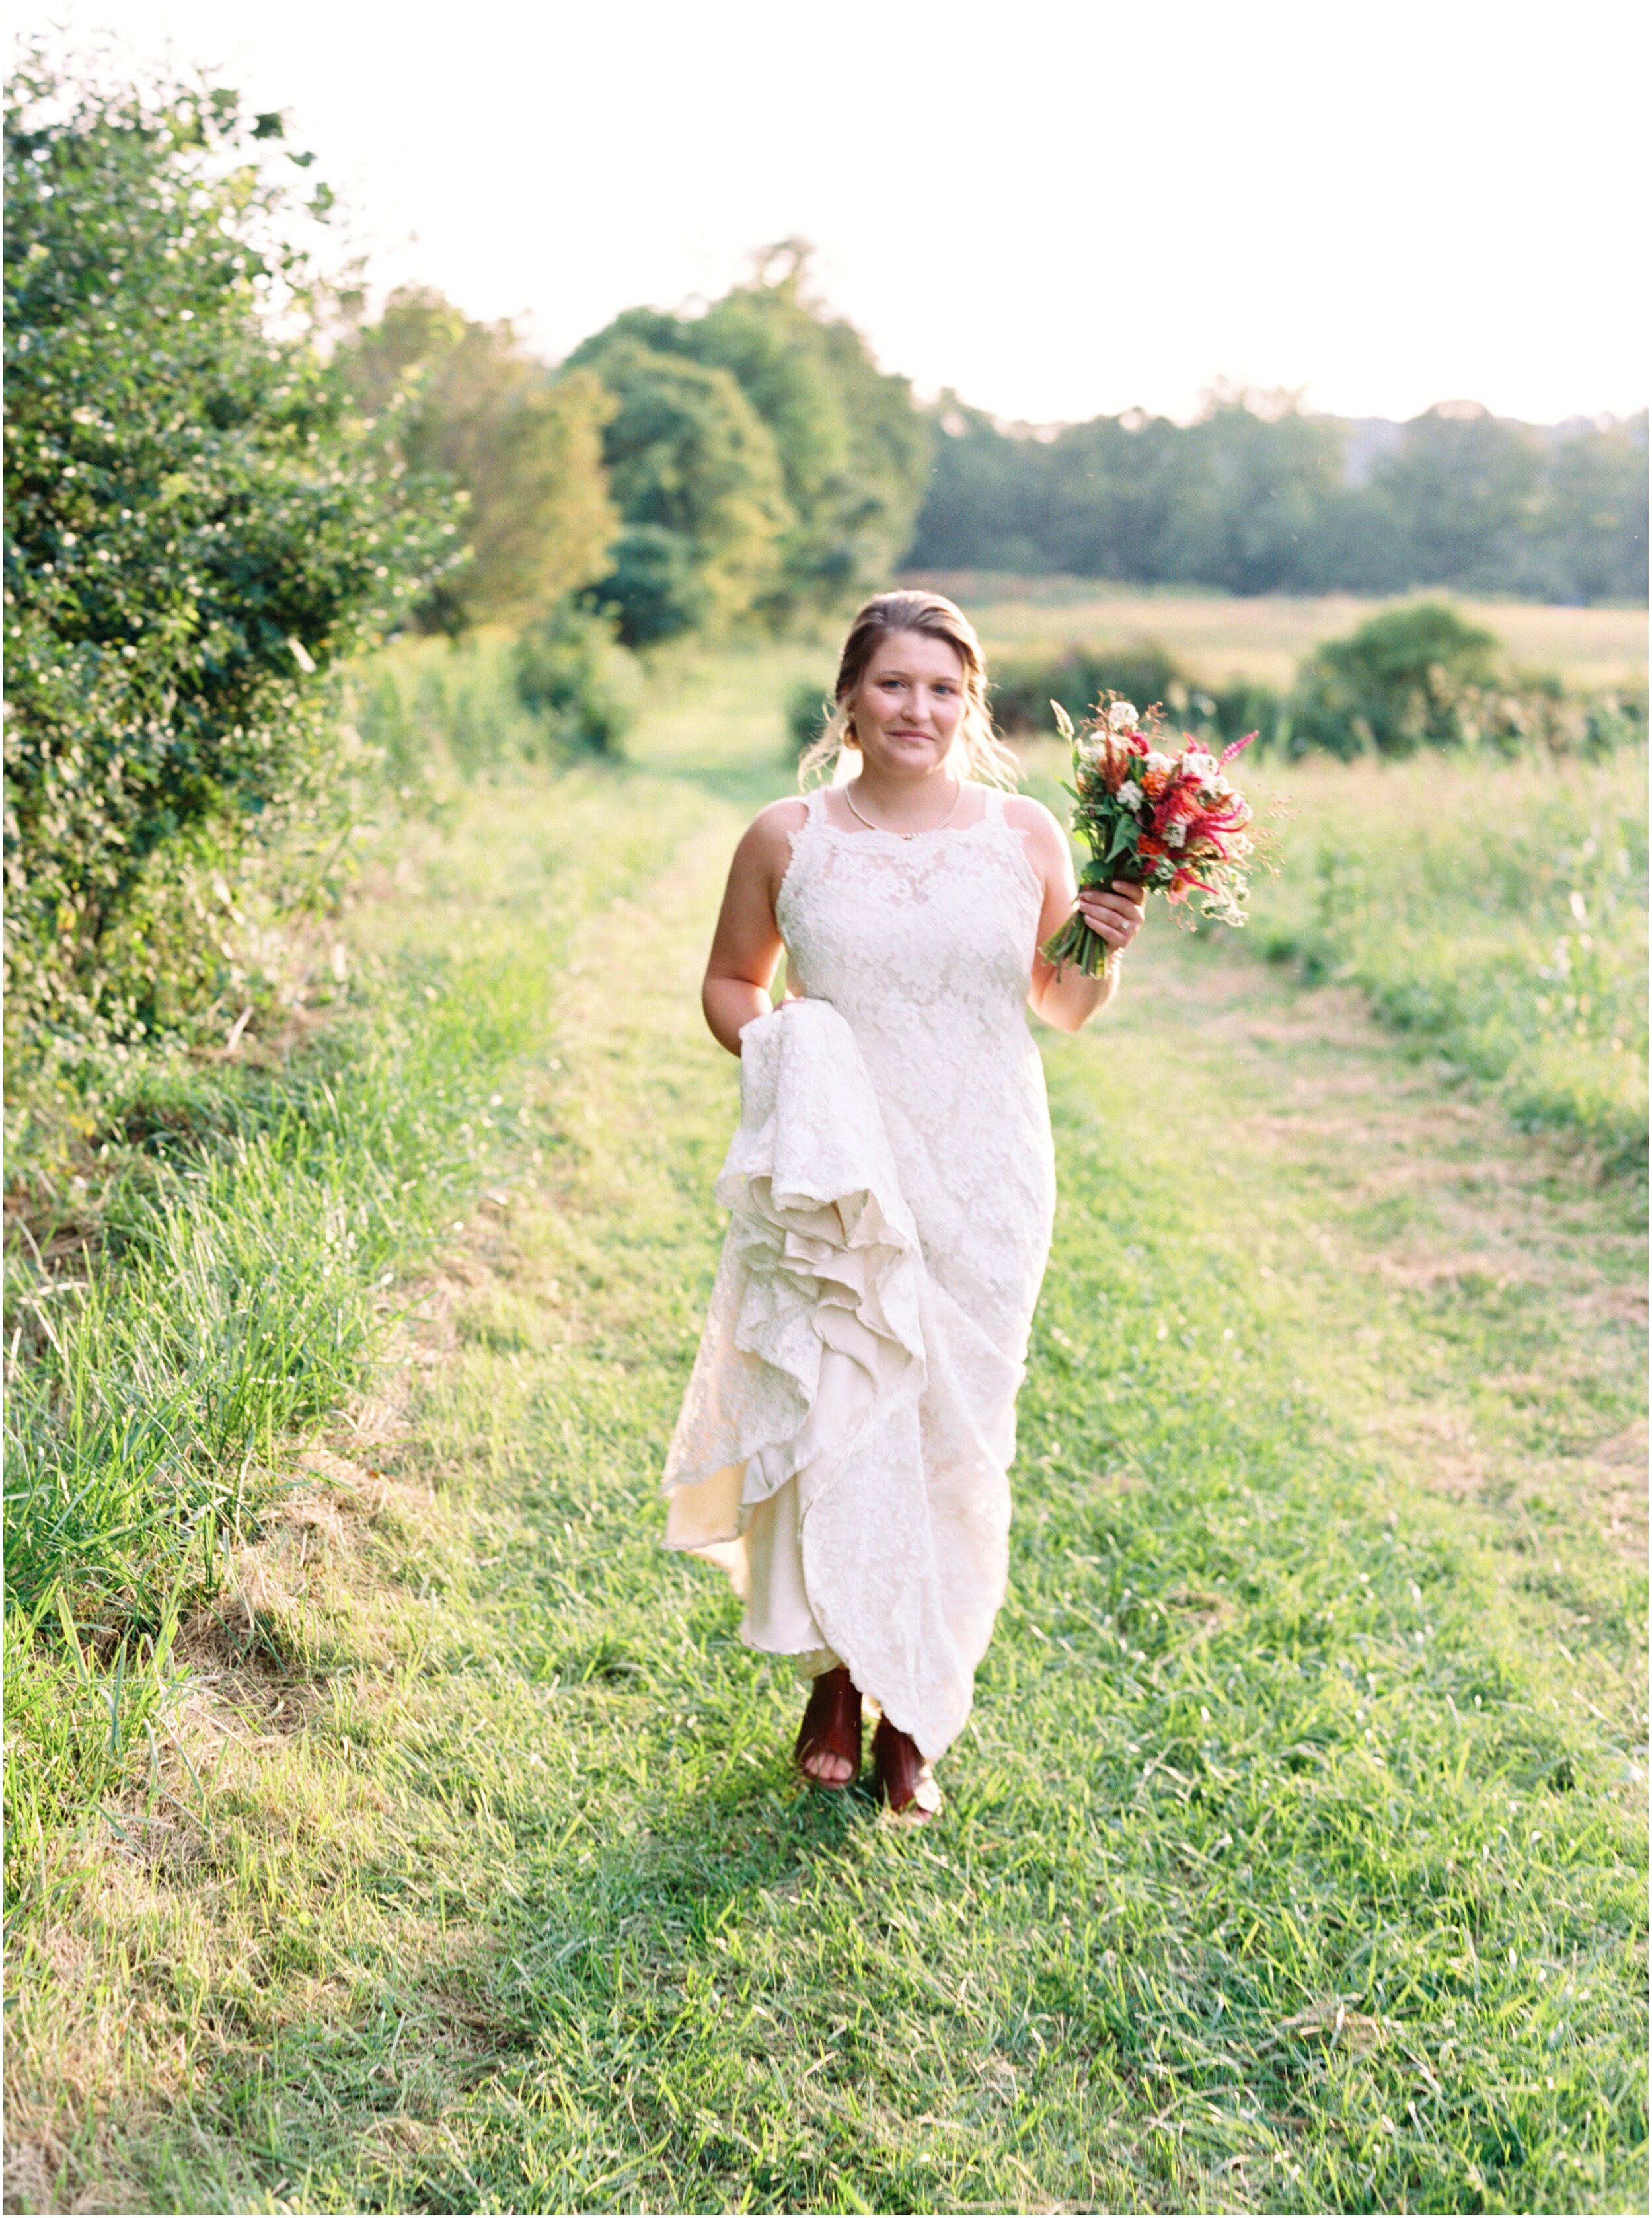 Hannah-Virginia-Rustic-Elegant-River-Bridal-Portraits_0020.jpg